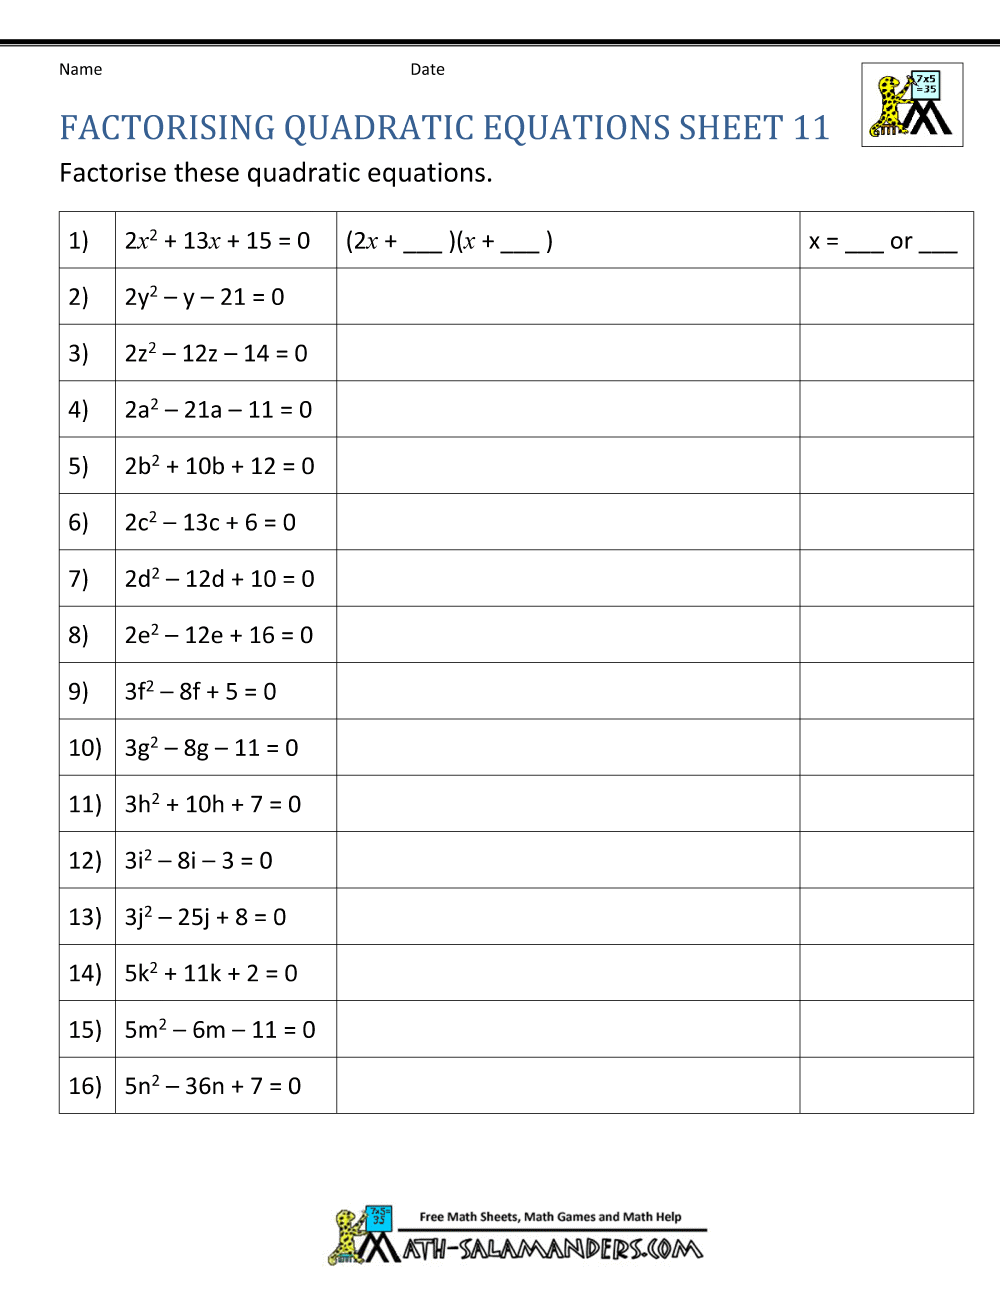 Factoring Quadratic Equations With Solving Quadratic Equations Worksheet